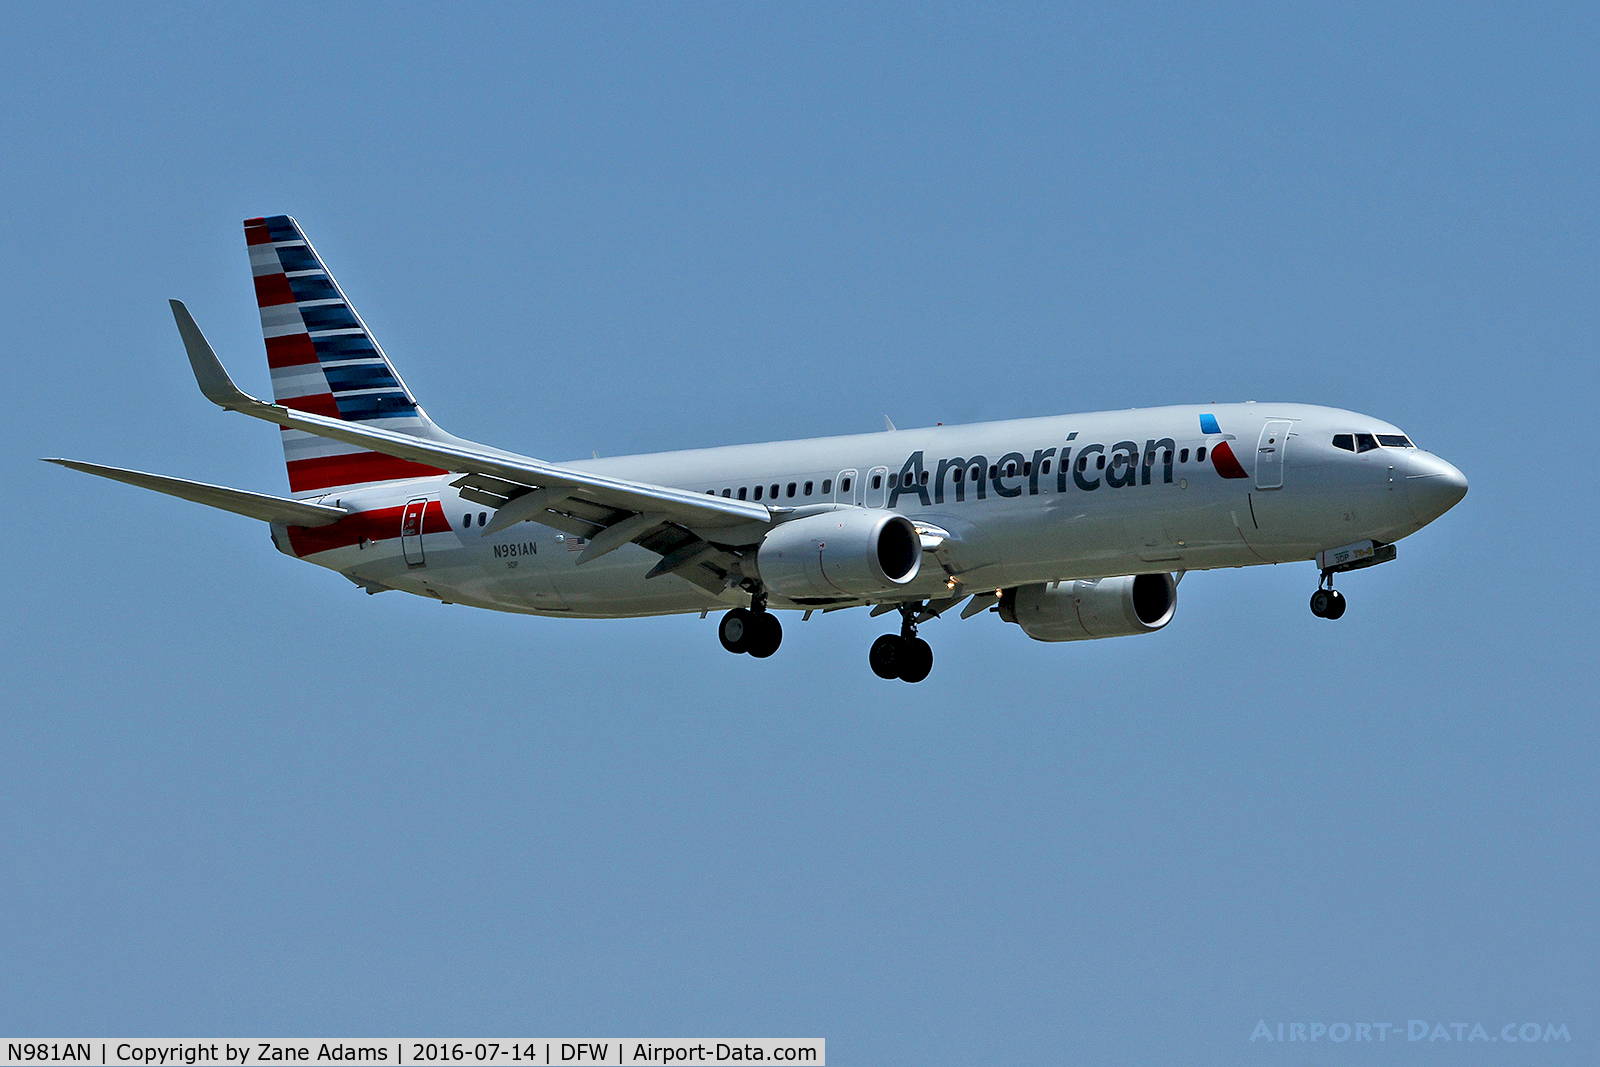 N981AN, Boeing 737-823 C/N 30897, Arriving at DFW Airport